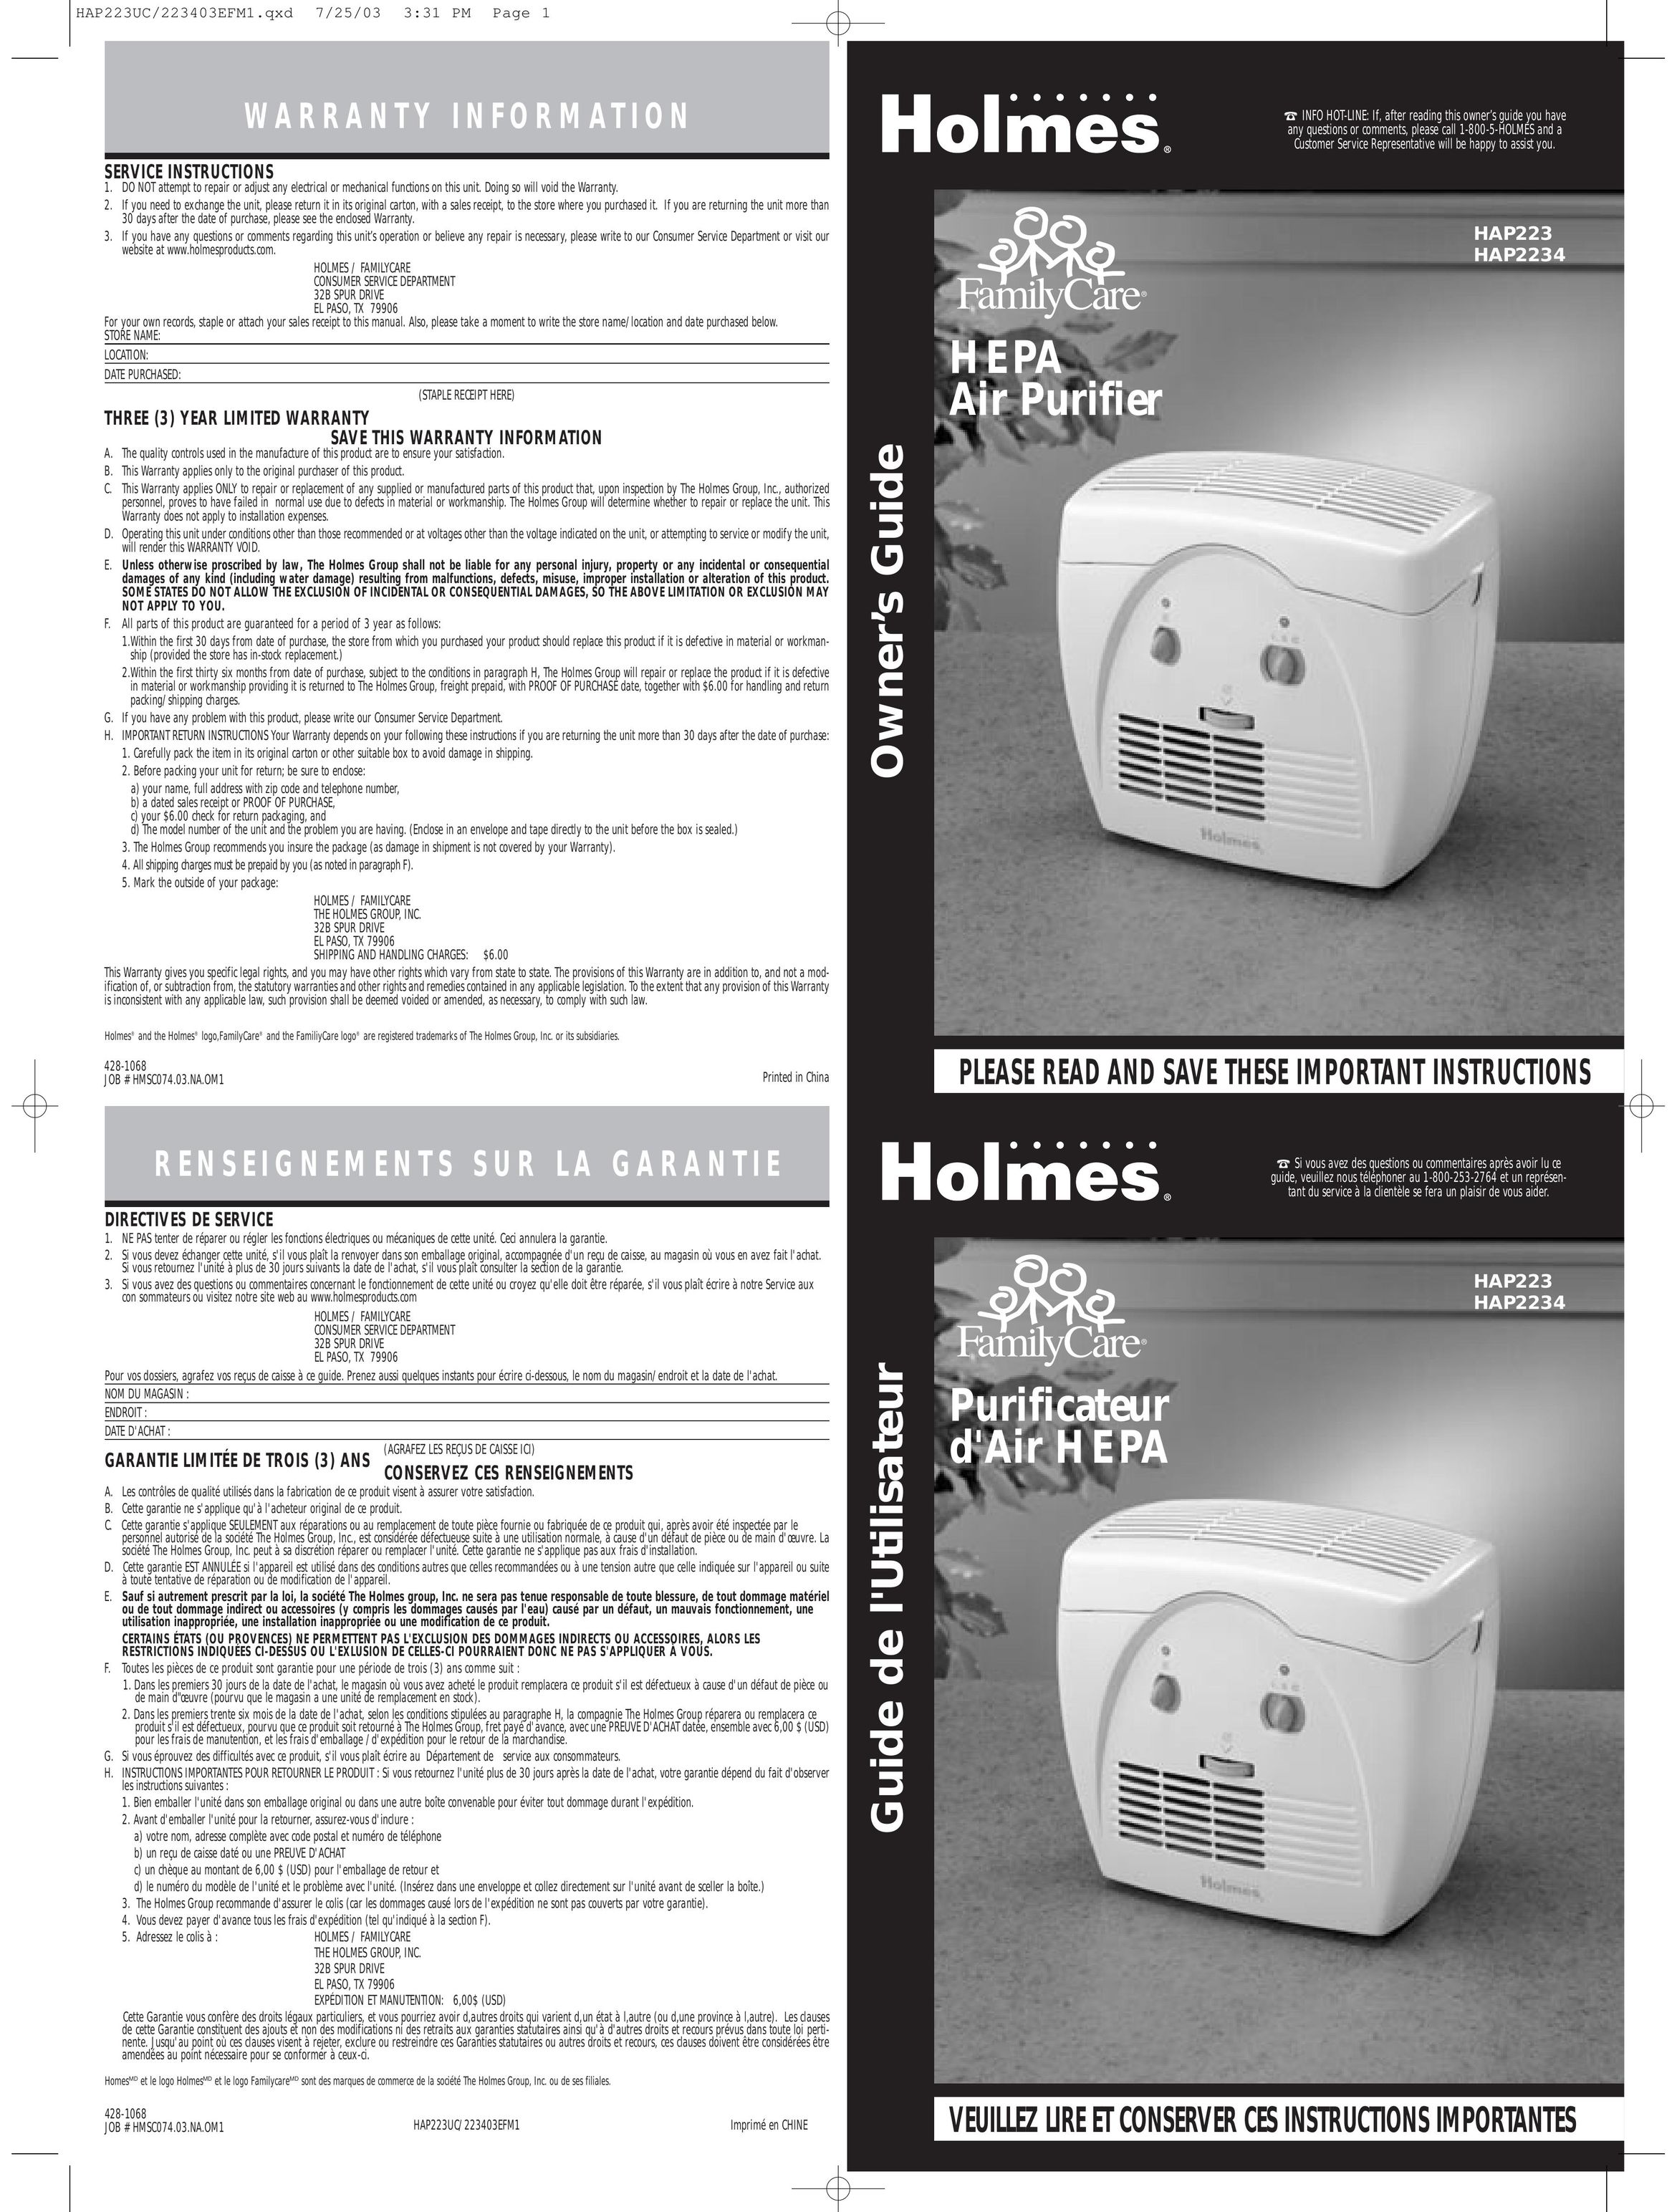 Holmes HAP223 Air Cleaner User Manual